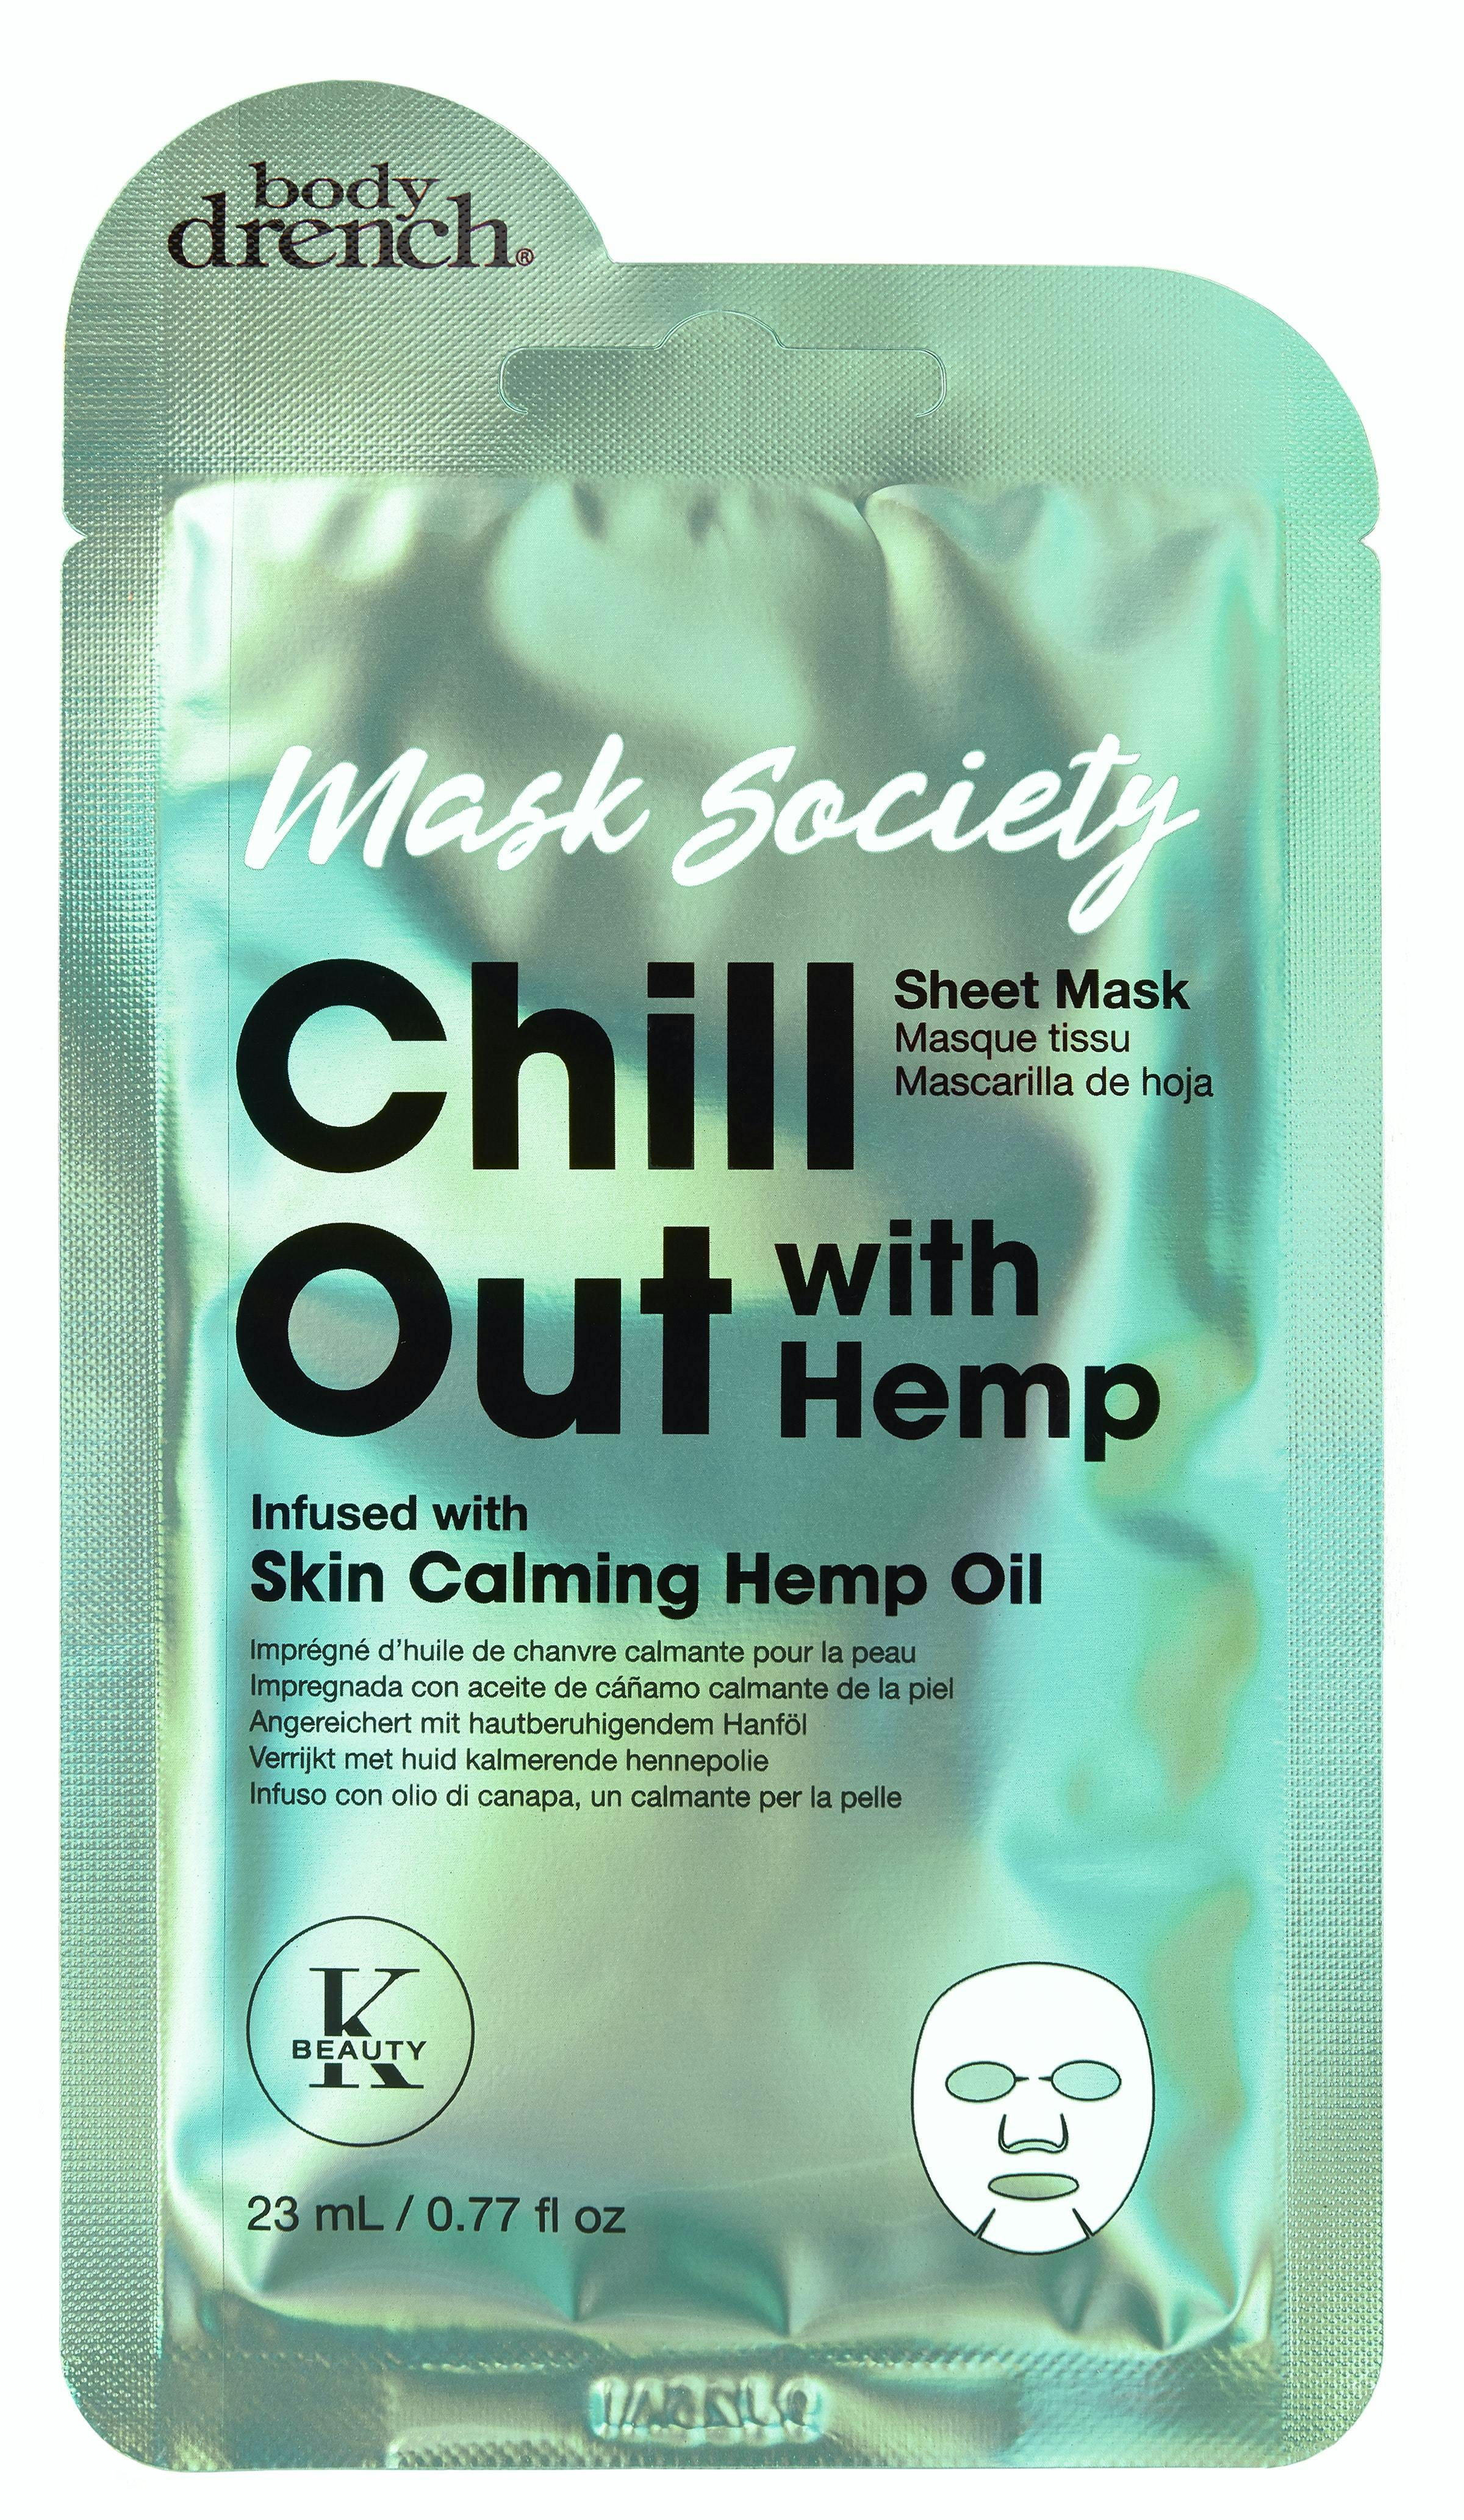 Mask Society ChillOut Sheet Mask 23ml